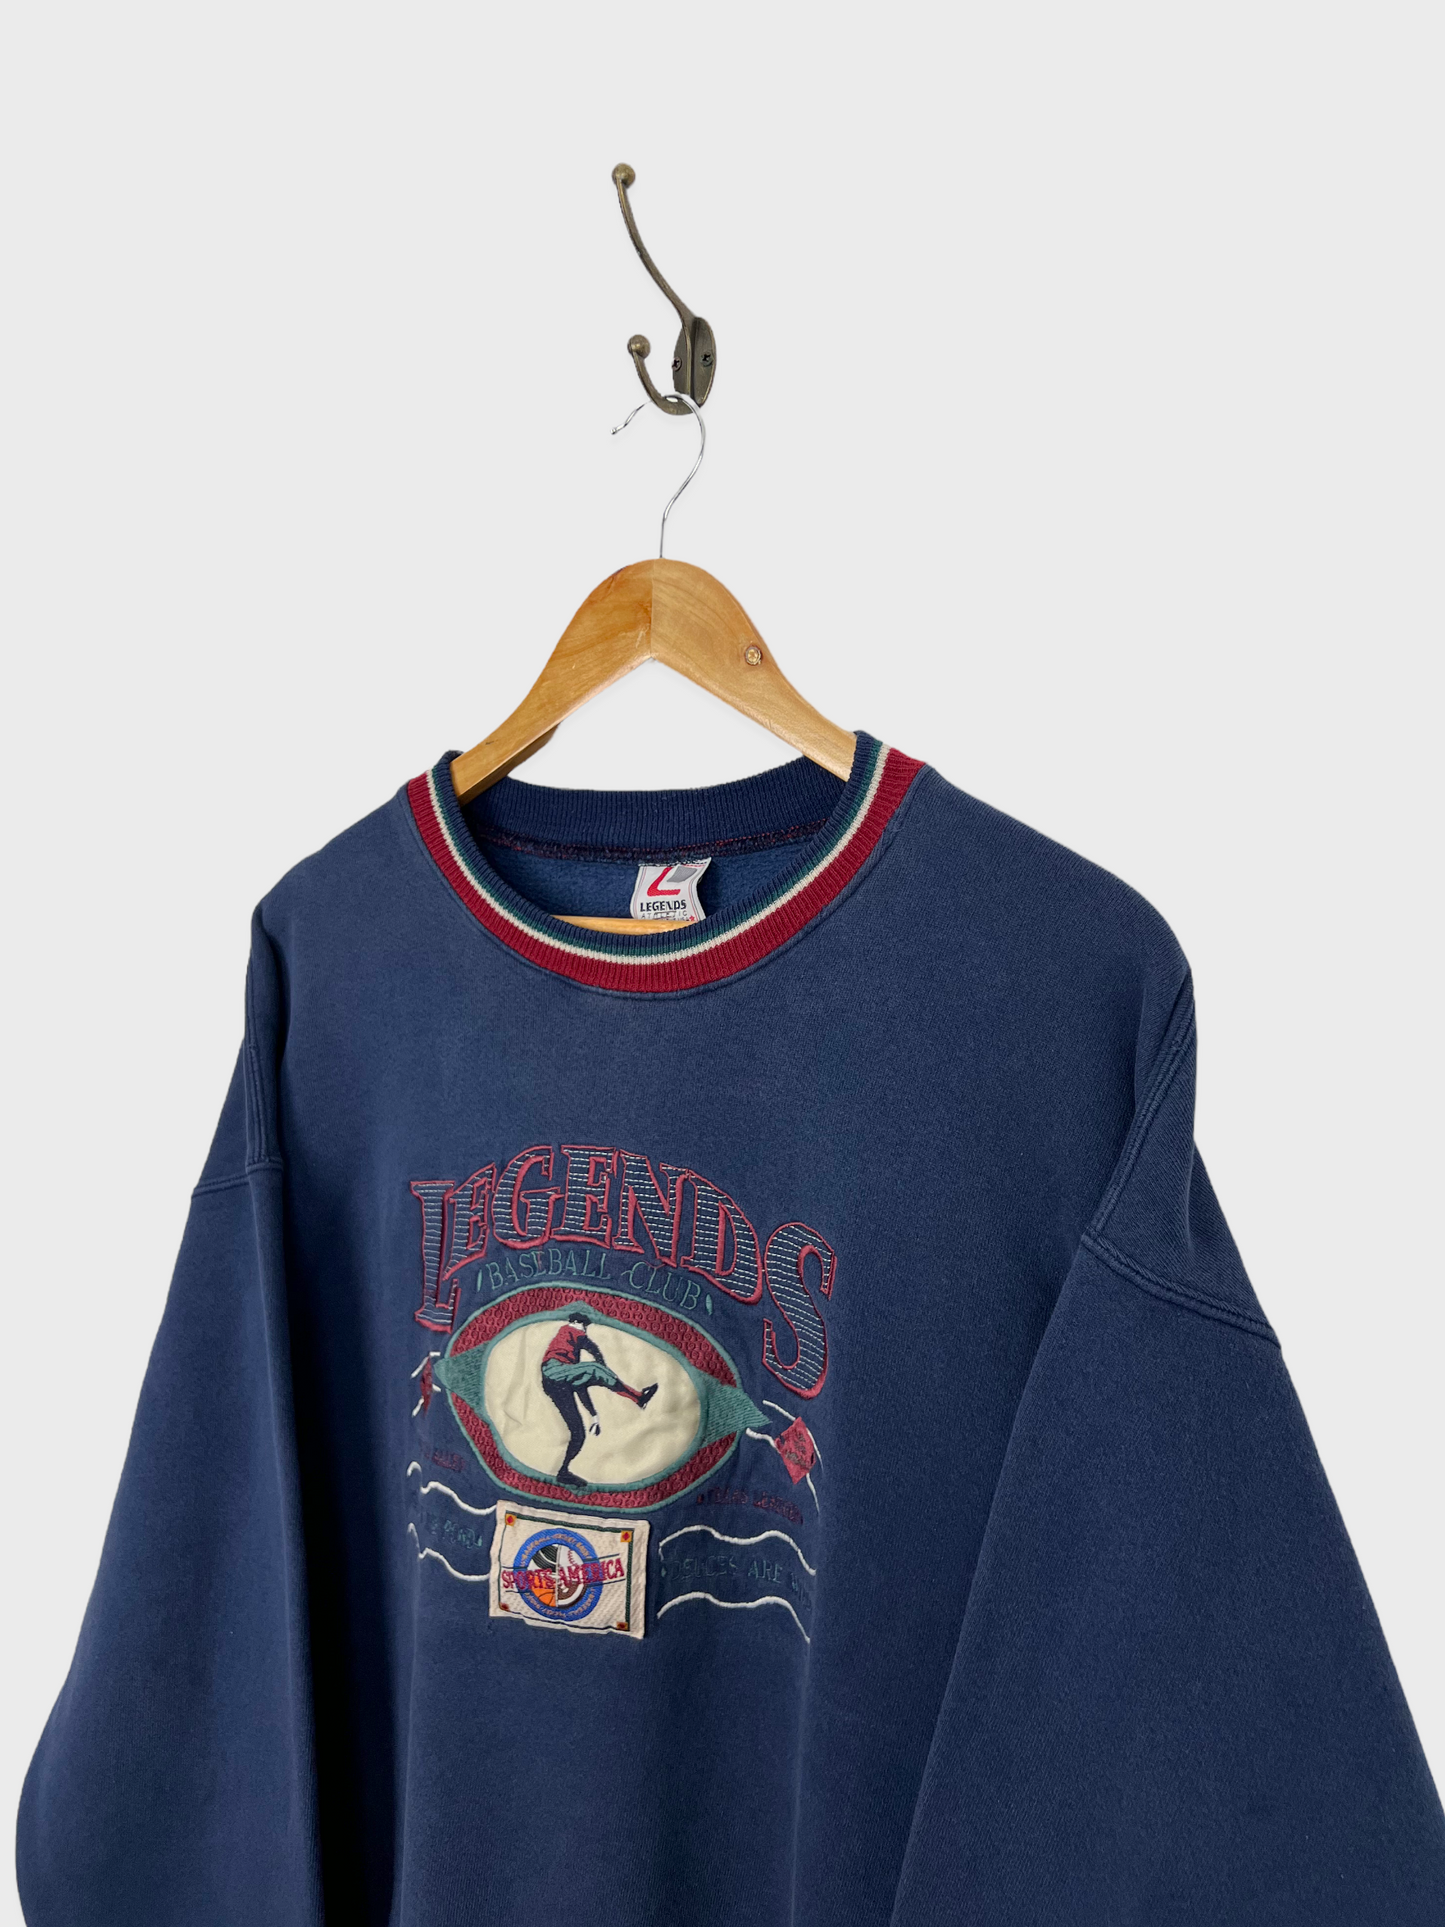 90's Legends Baseball USA Made Embroidered Vintage Sweatshirt Size M-L